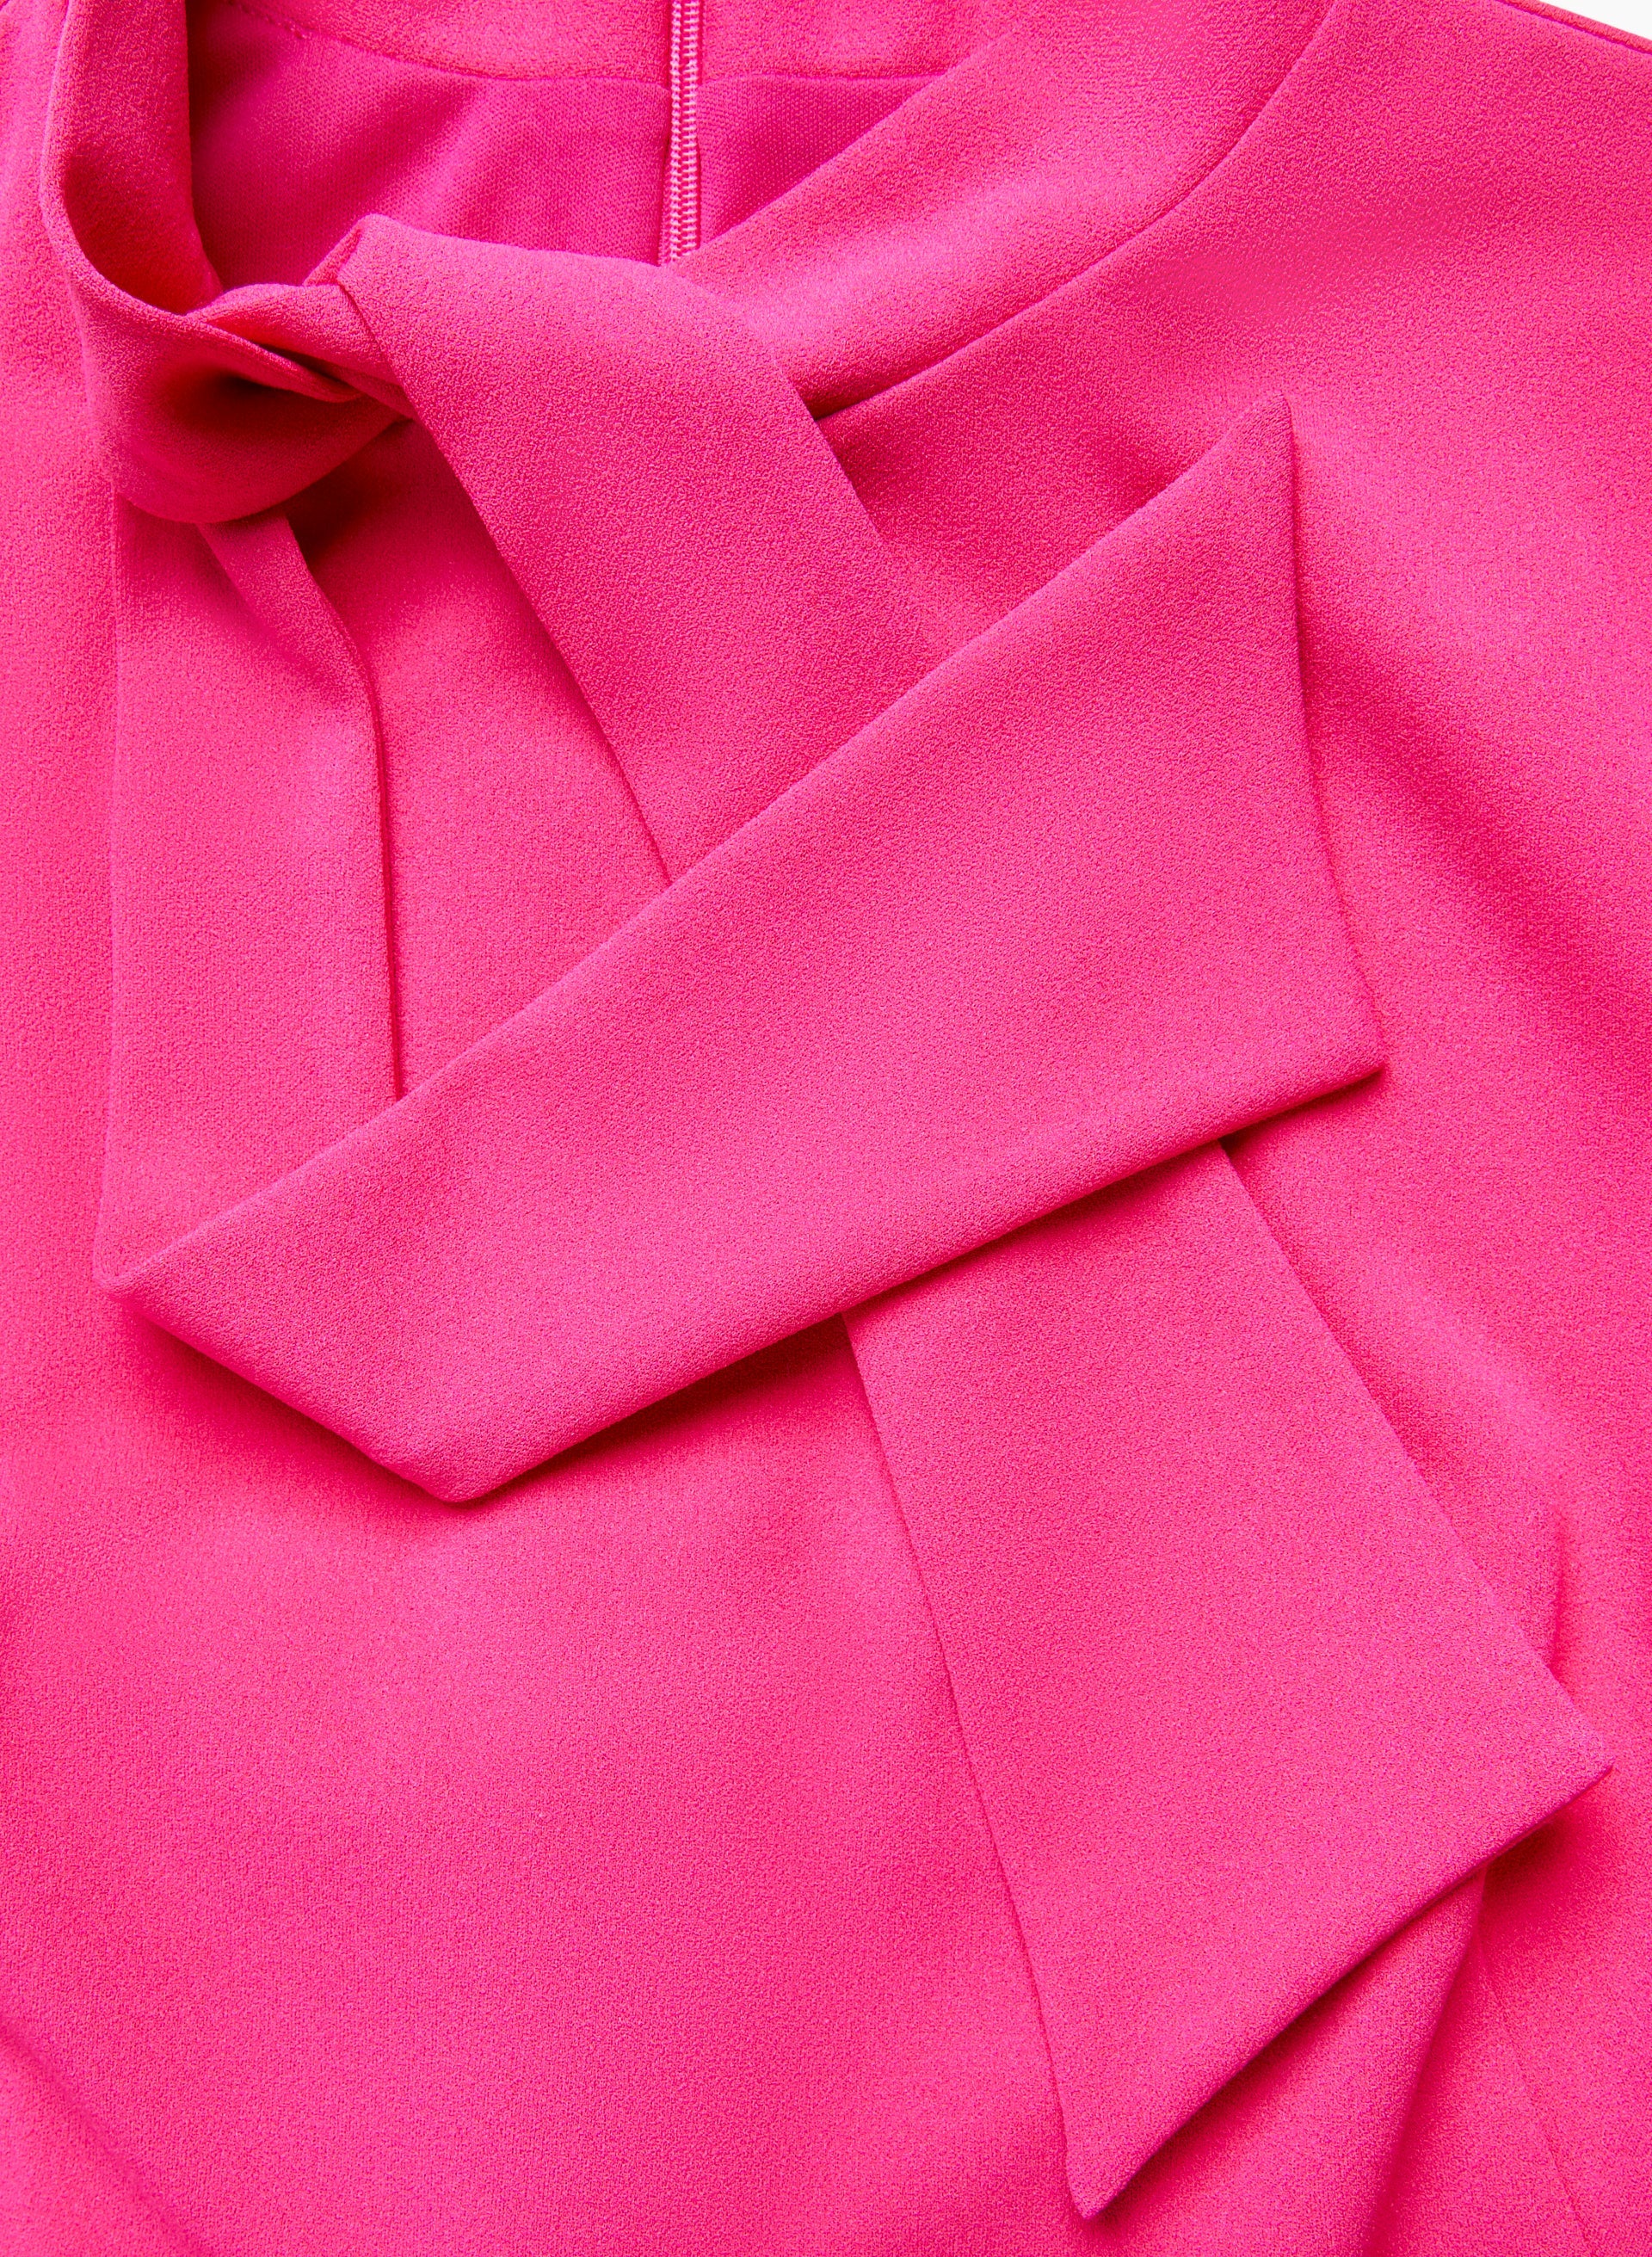 Tawop Built In Bra Dress Women'S Sleeveless Father'S Day Pink 8 